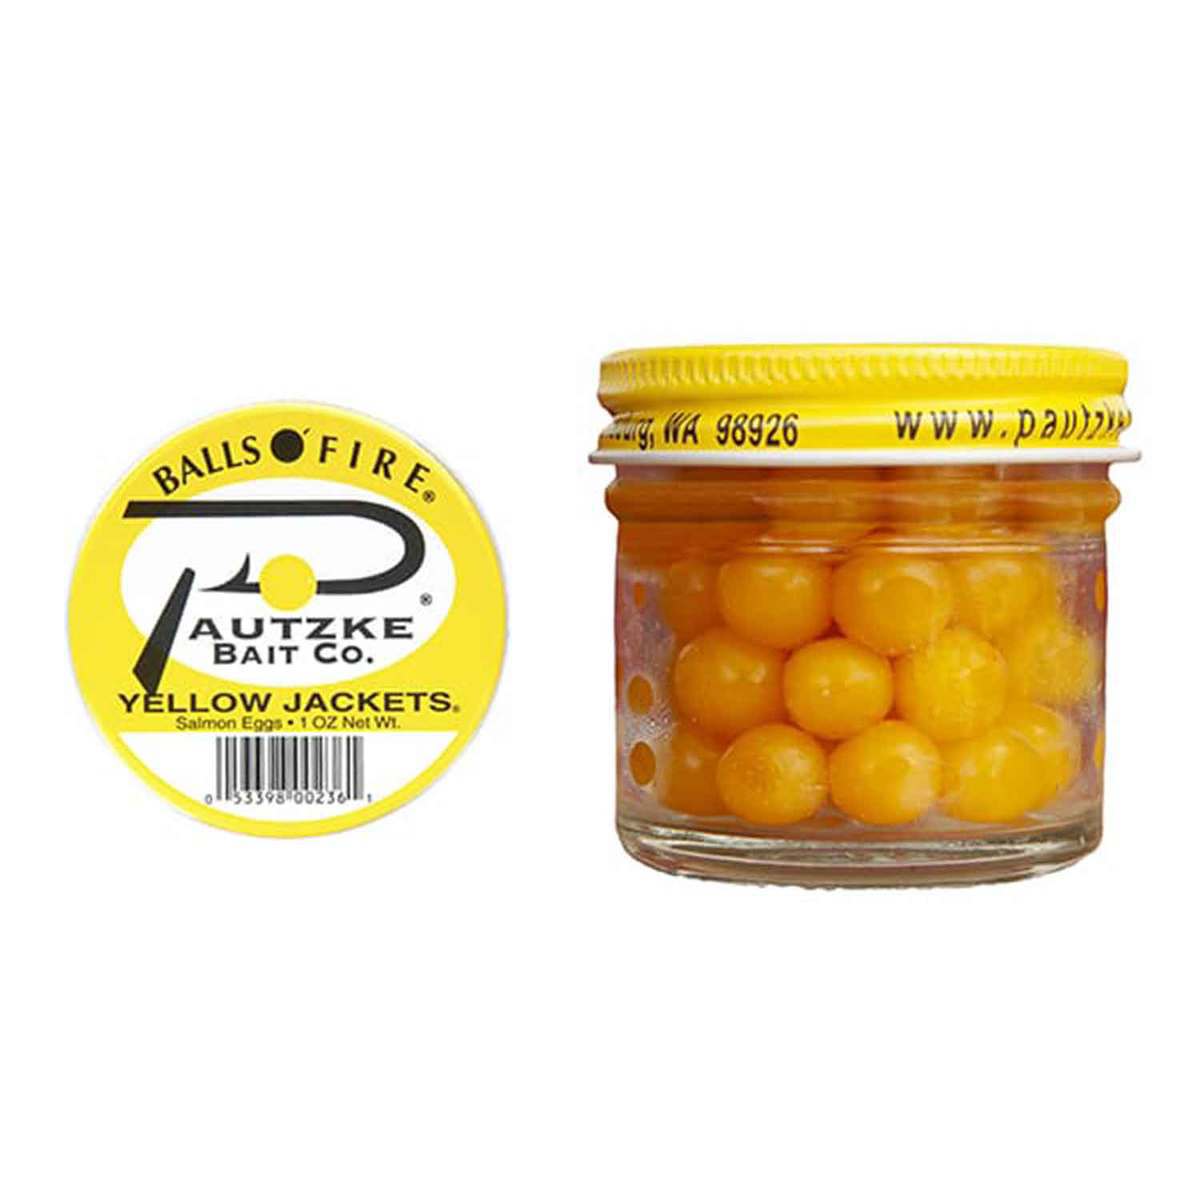 Pautzke Bait Yellow Jackets Salmon Eggs - Yellow Jackets 1oz